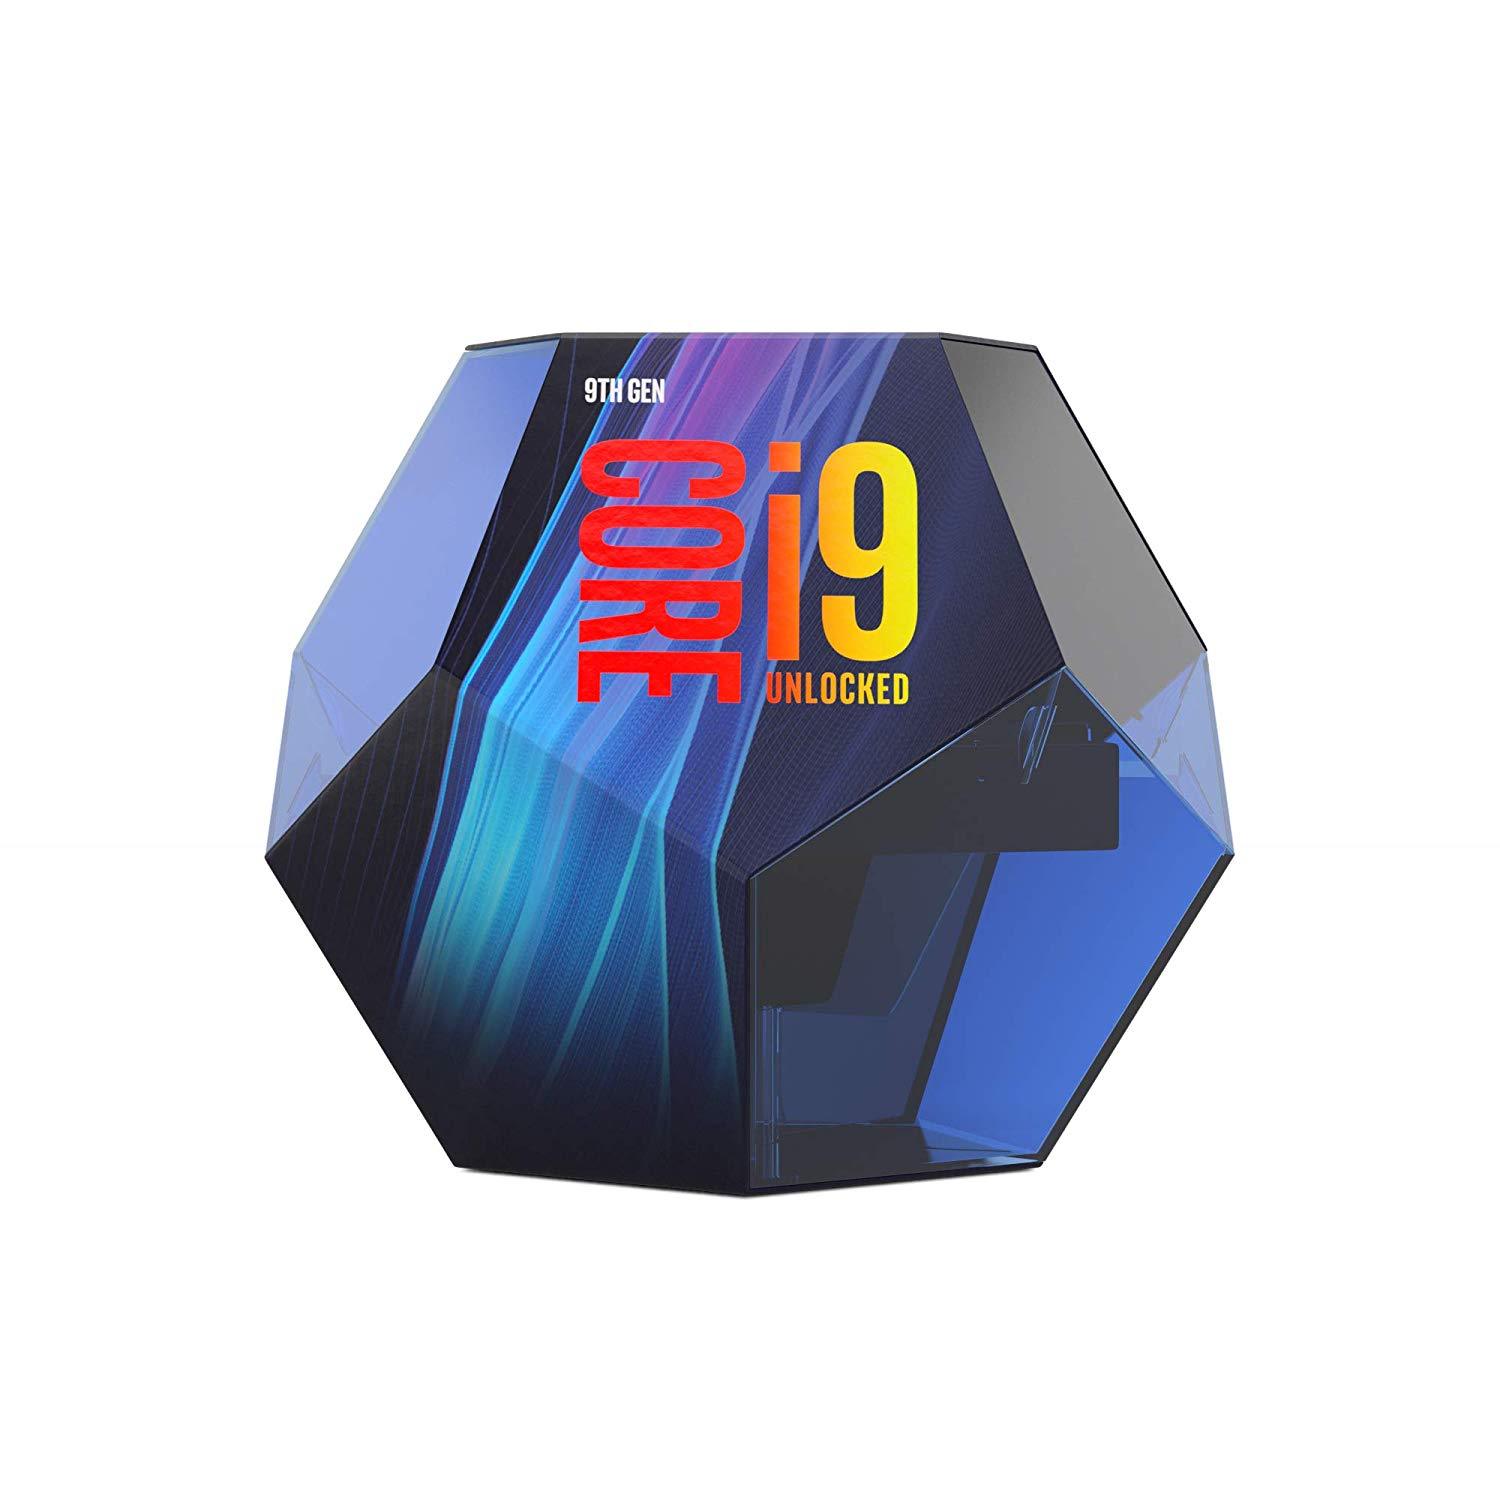 Intel Core i9-9900K, 8 Cores, 5.0GHz LGA1151 CPU - Store 974 | ستور ٩٧٤